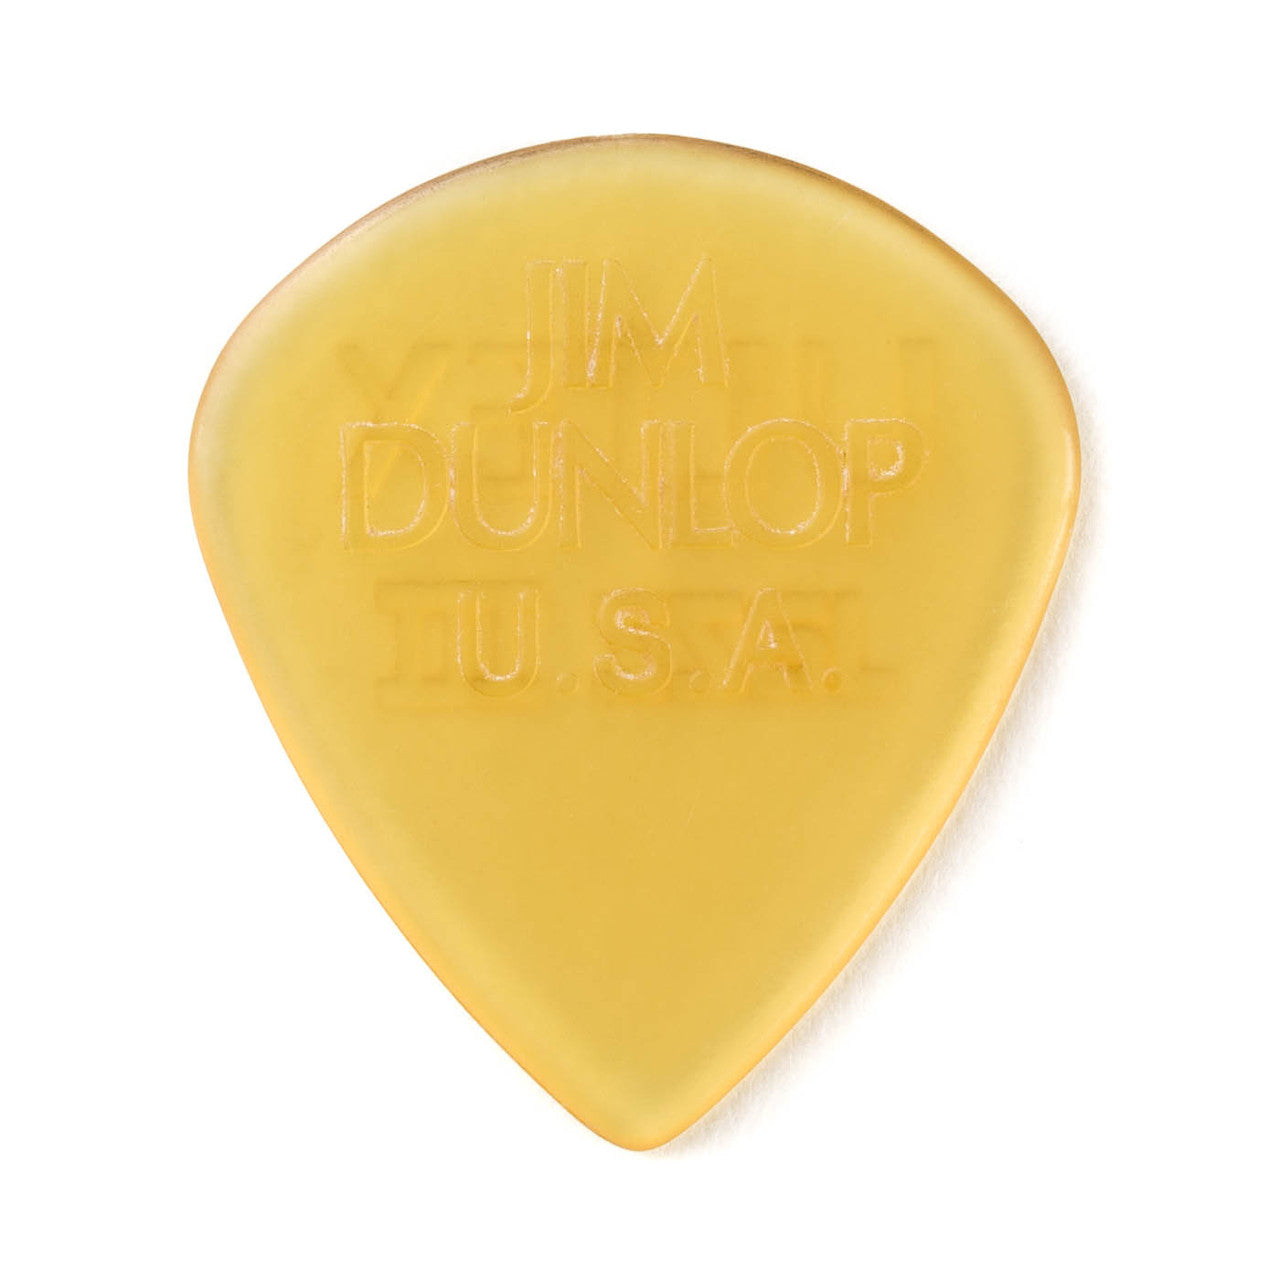 Dunlop Ultex® Jazz III 1.38mm Pick